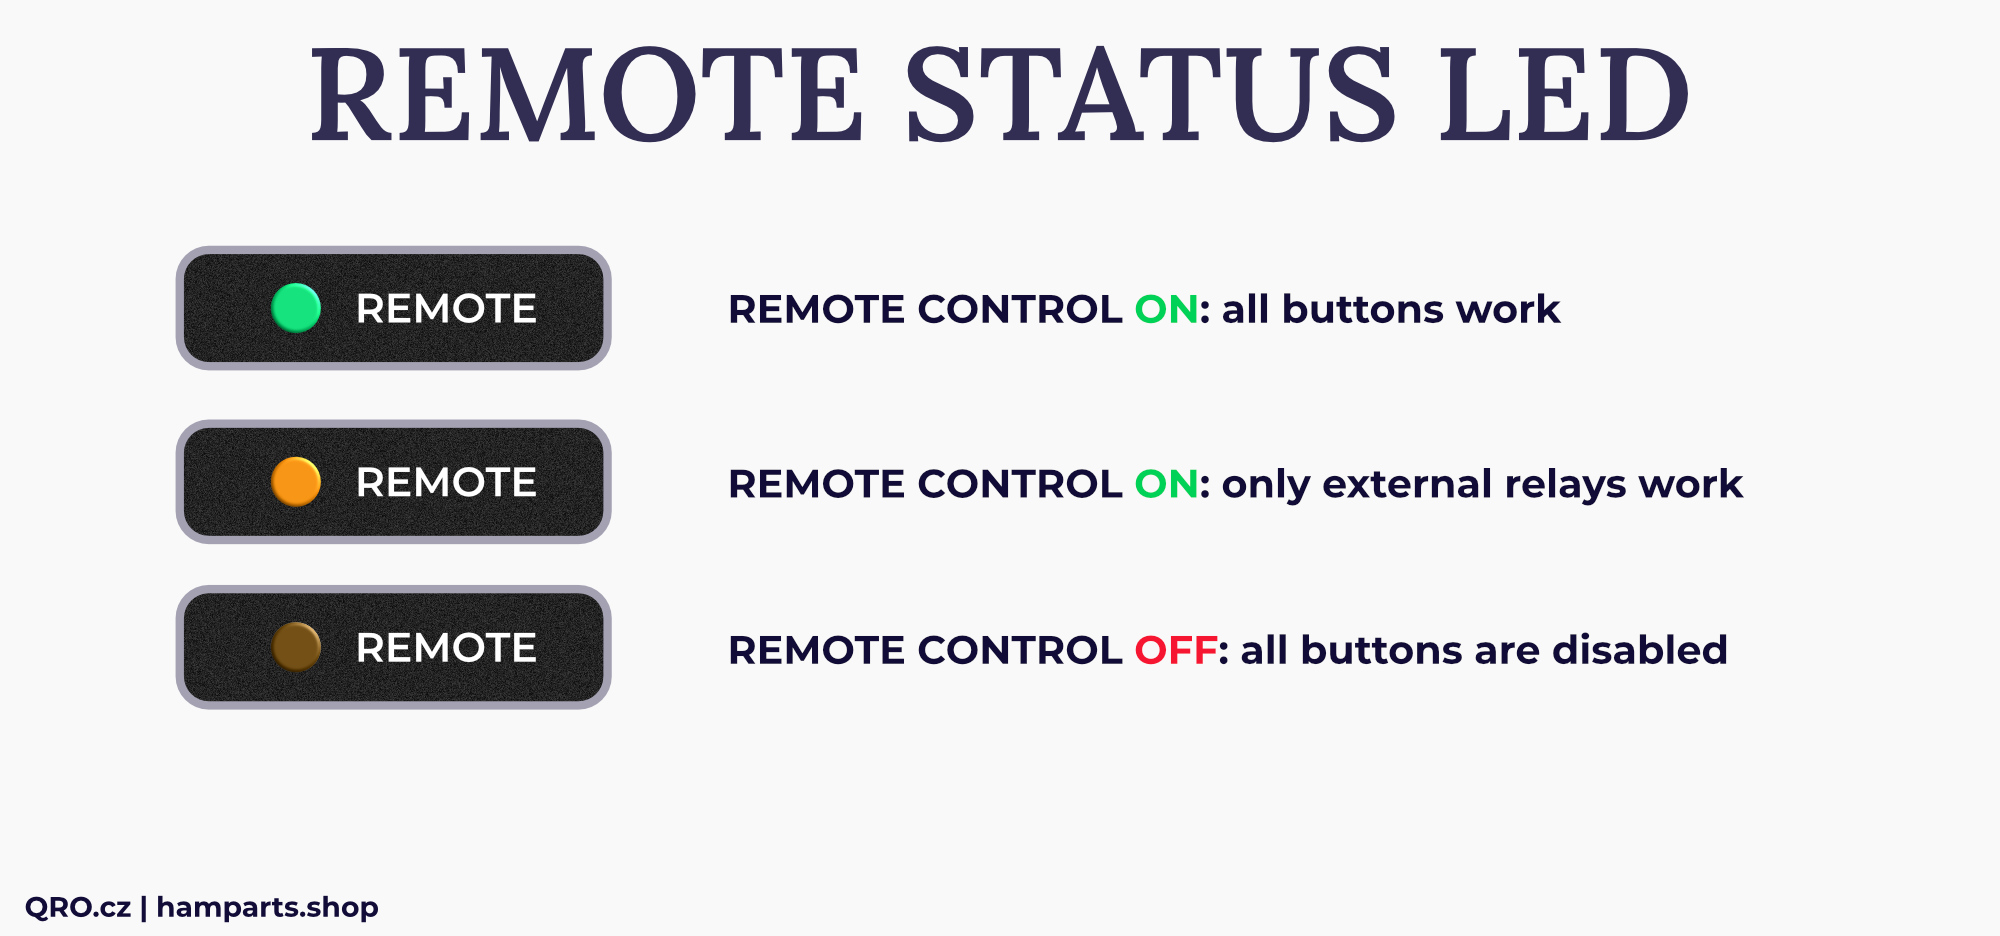 easy controller remote control knob using qro.cz hamparts.shop